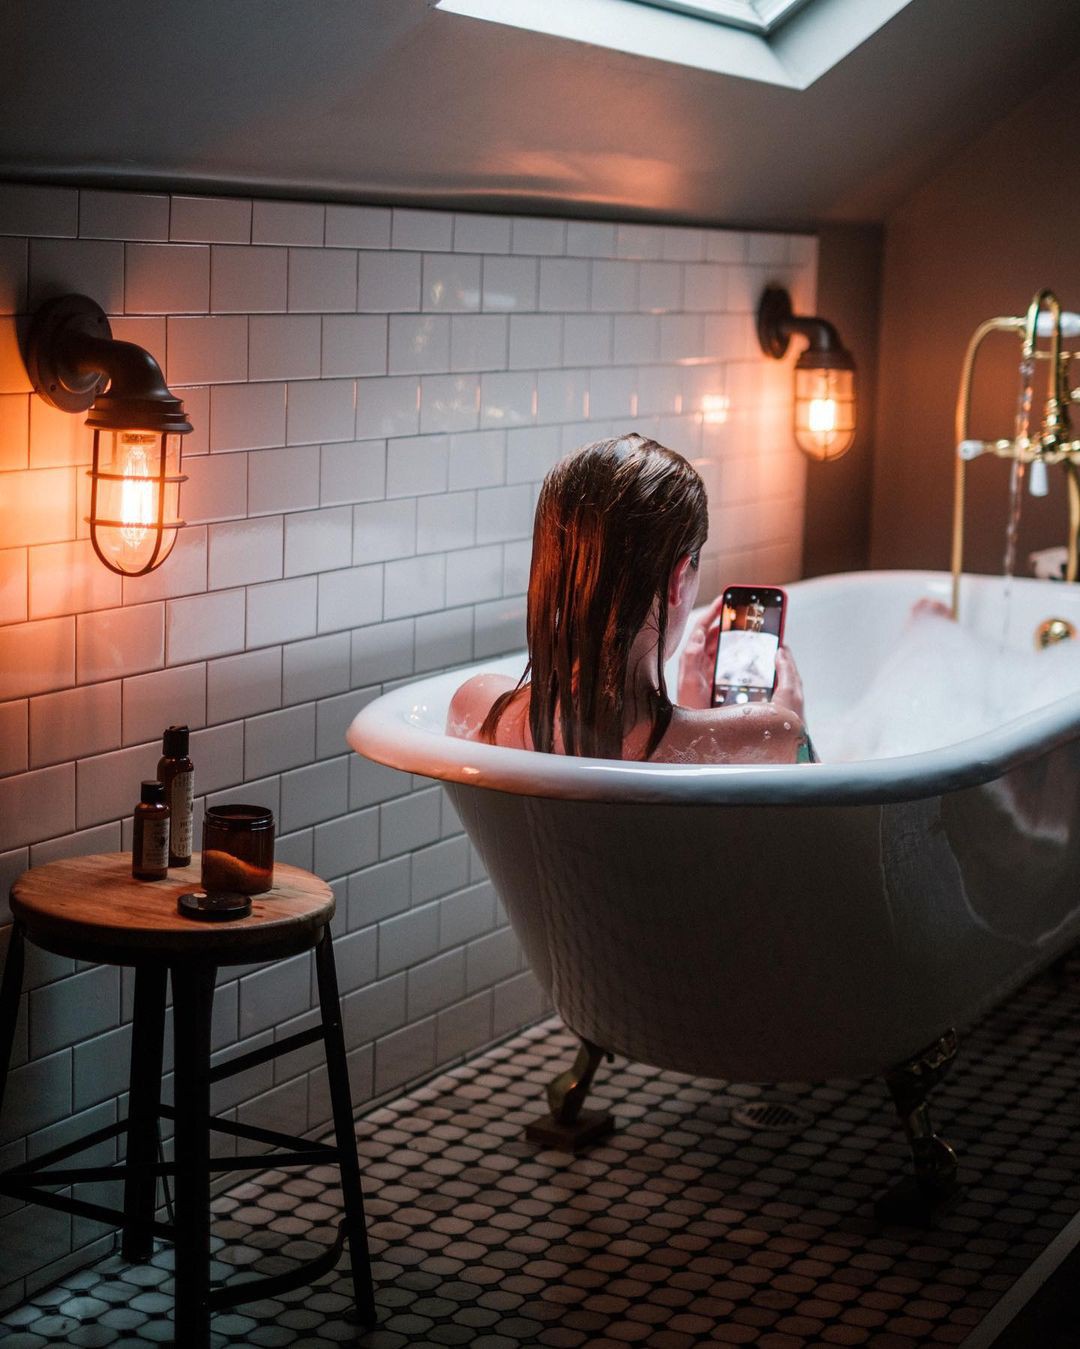 Ireland Baldwin Naked In Bathtub Hot Celebs Home